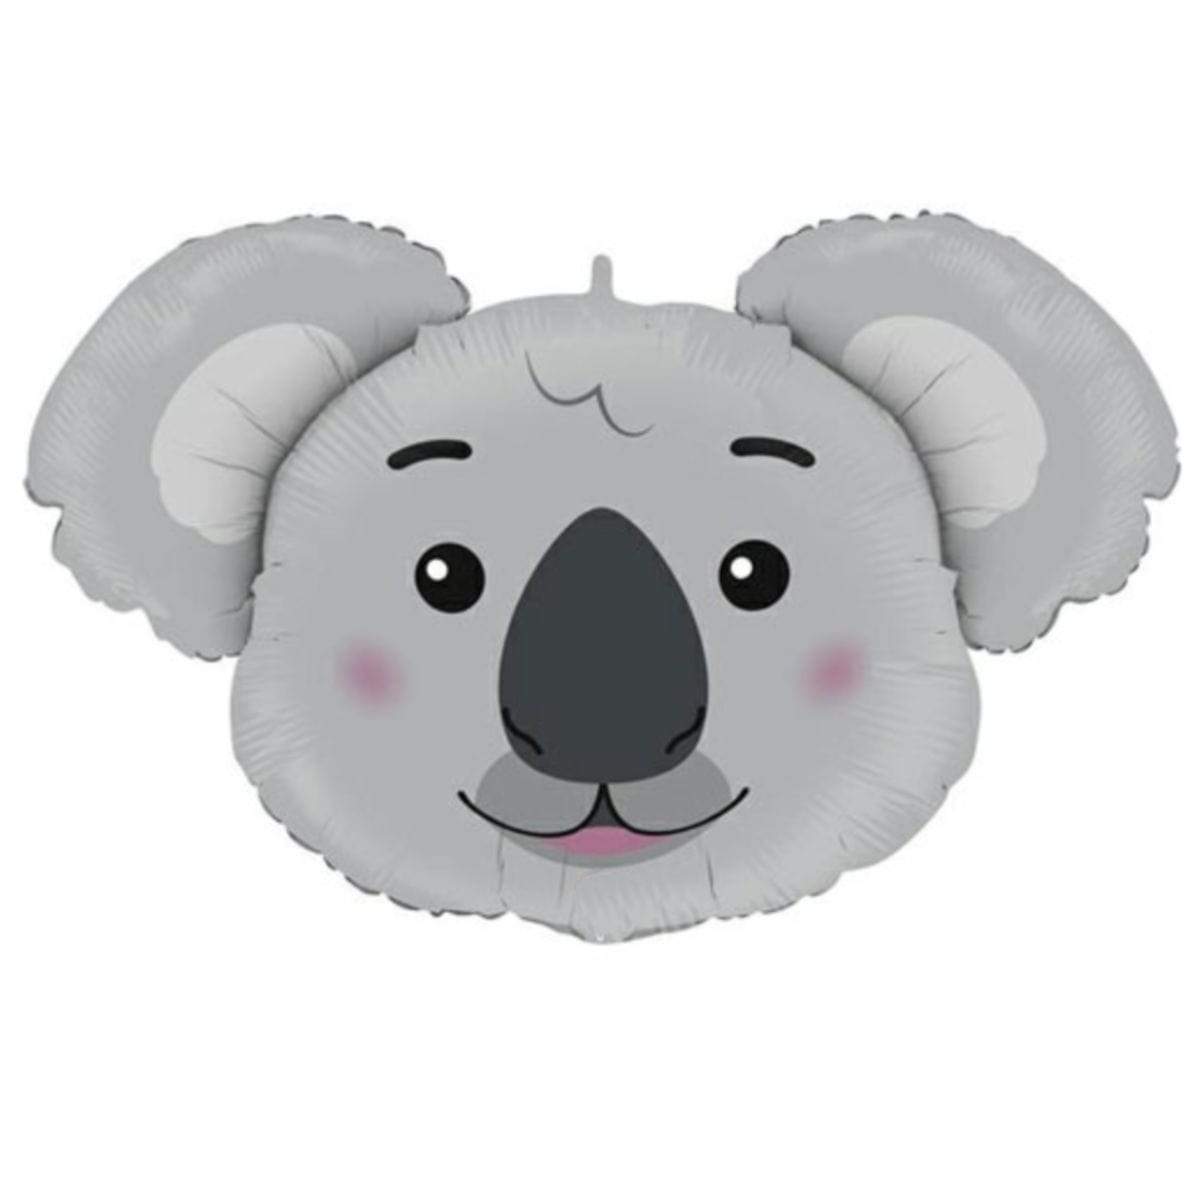 Koala Head Balloon | Koala Party Balloon UK Grabo